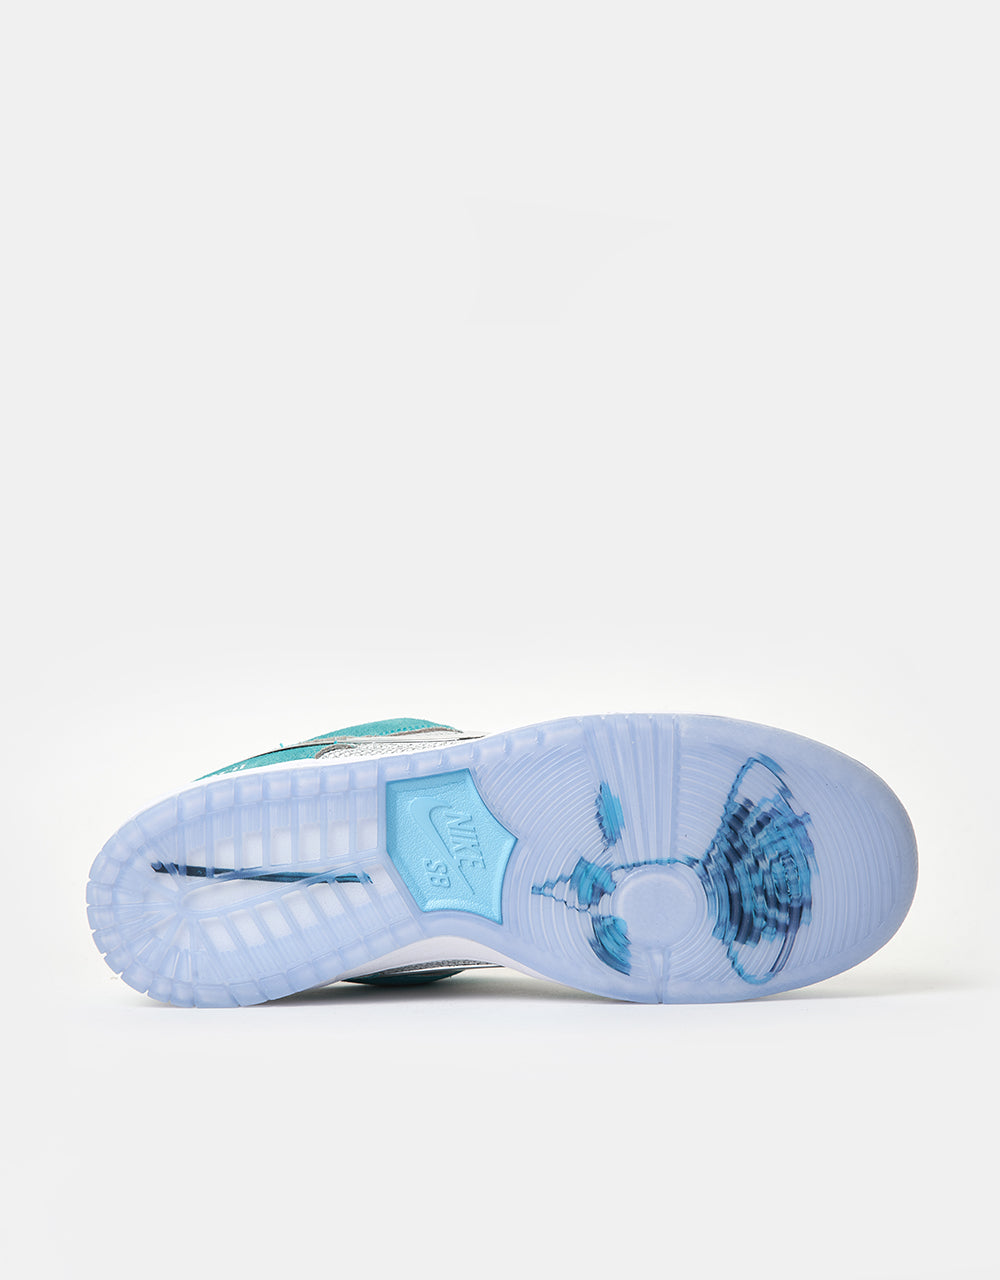 Nike SB 'April' Dunk Low Pro QS Skate Shoes - Racer Blue/Metallic Silver-White